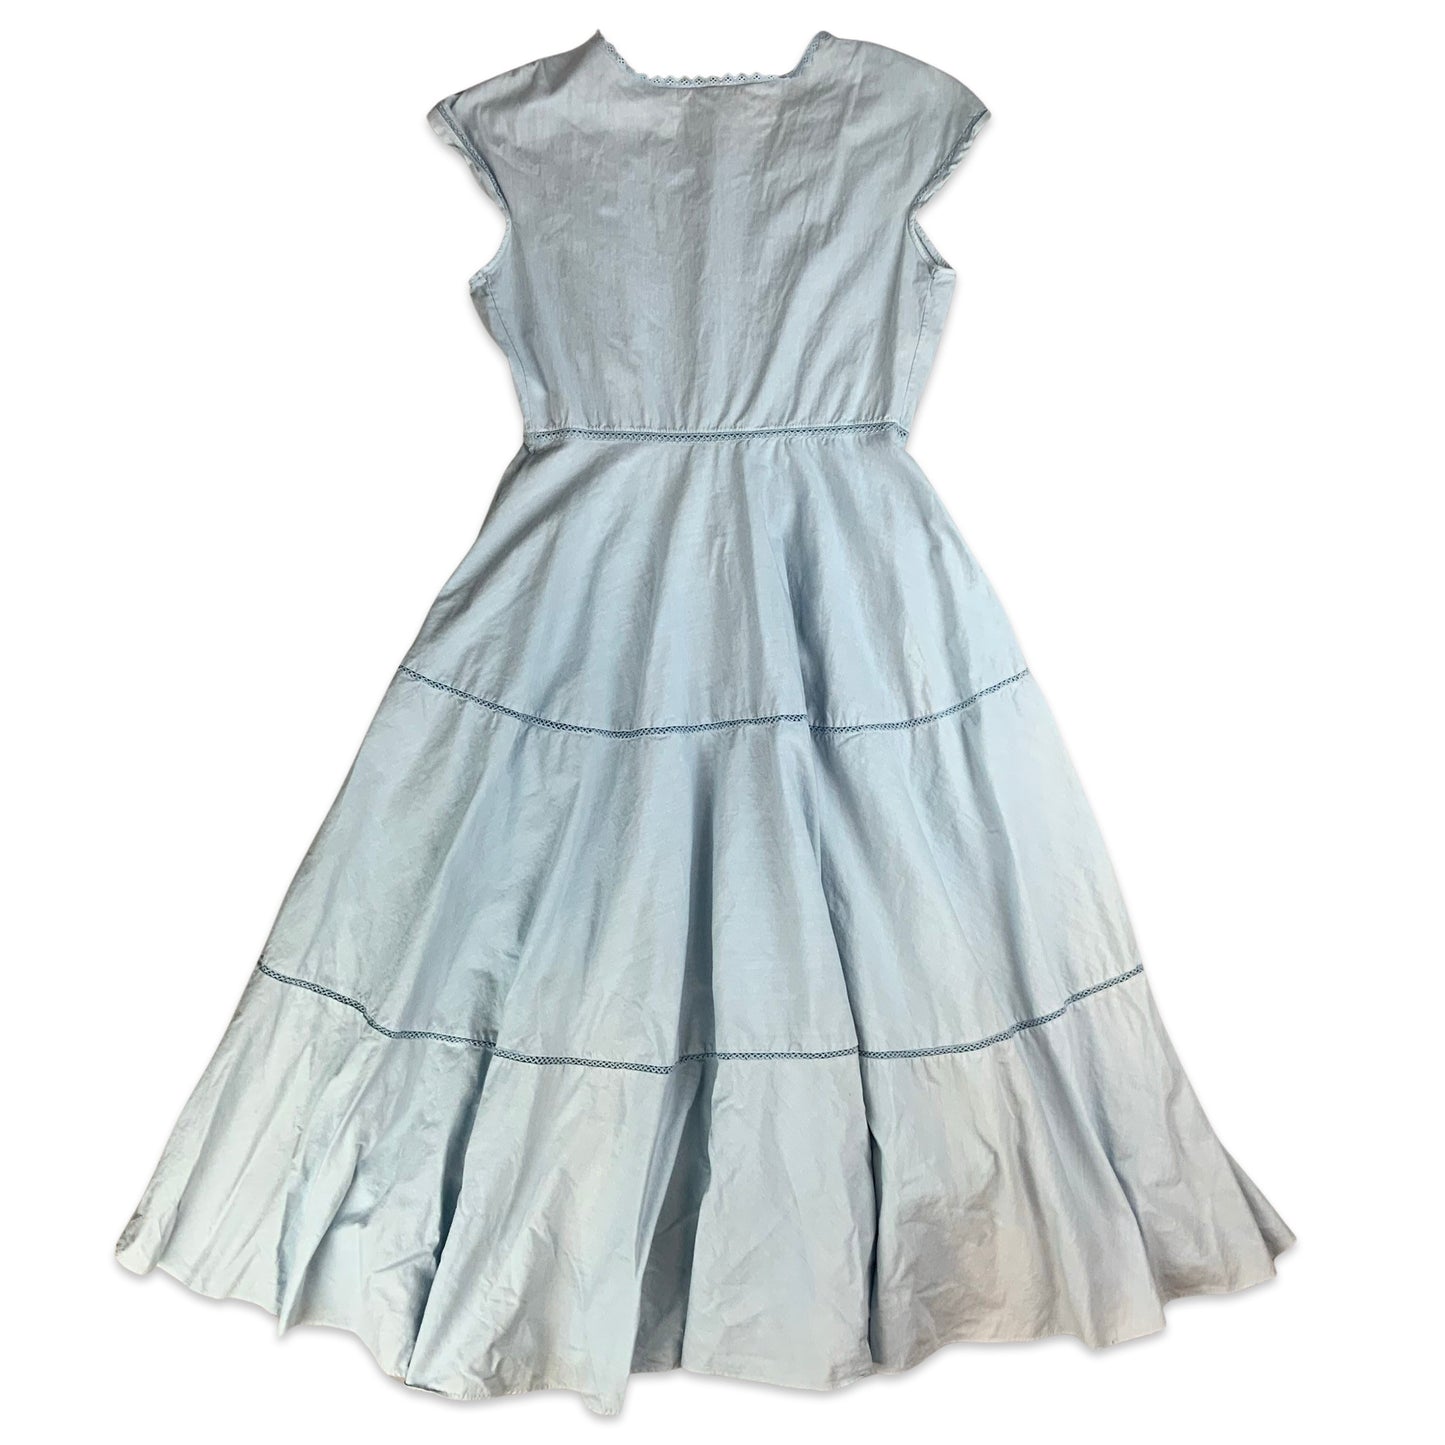 90s Baby Blue Prairie Dress